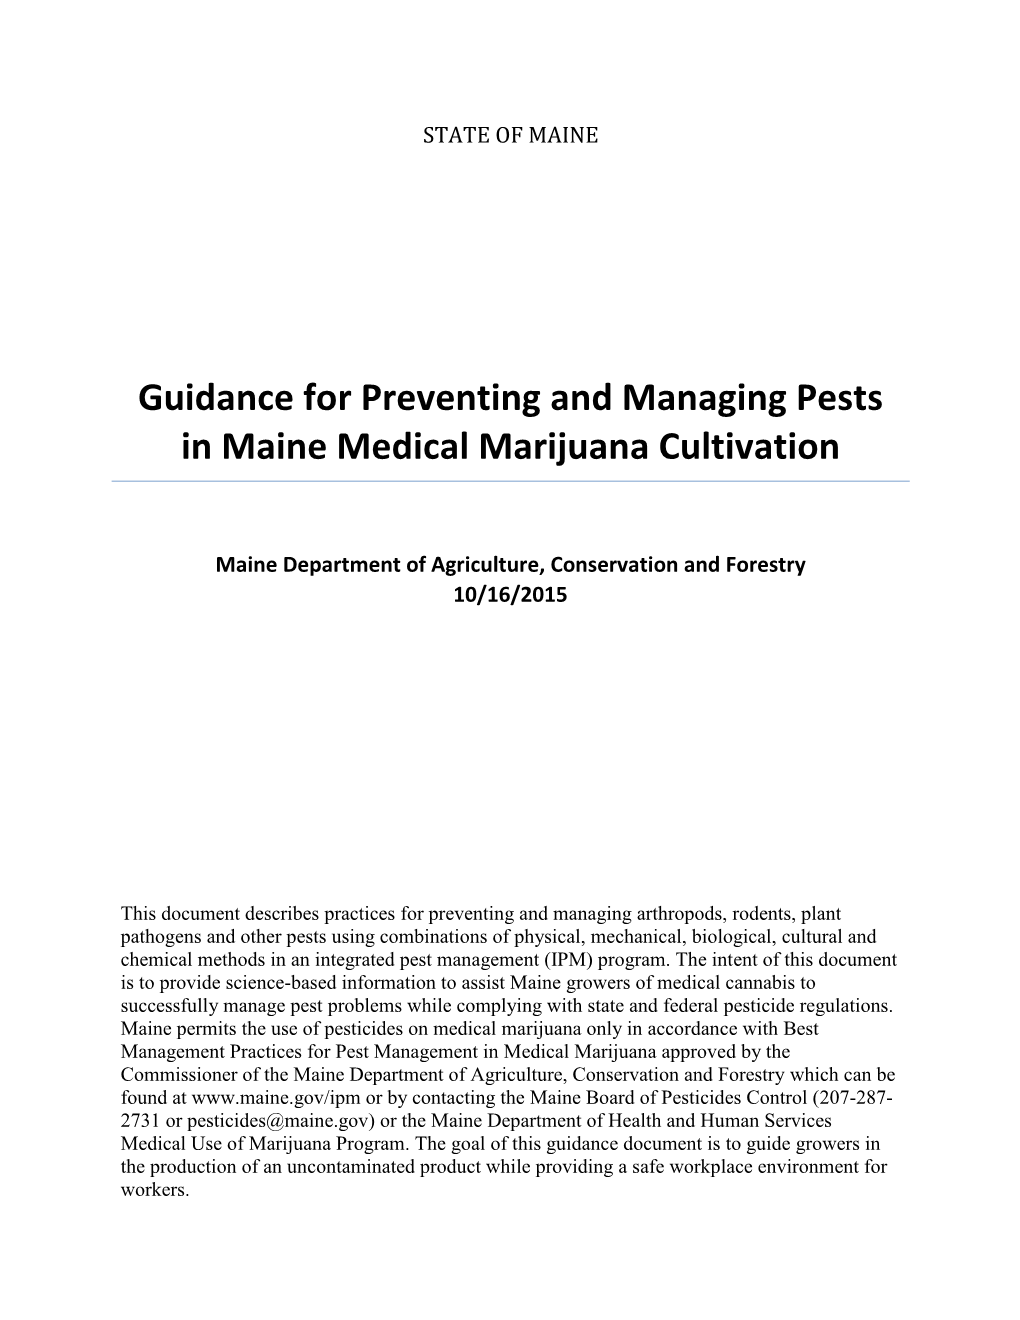 Medical Marijuana Pest Management Guidance